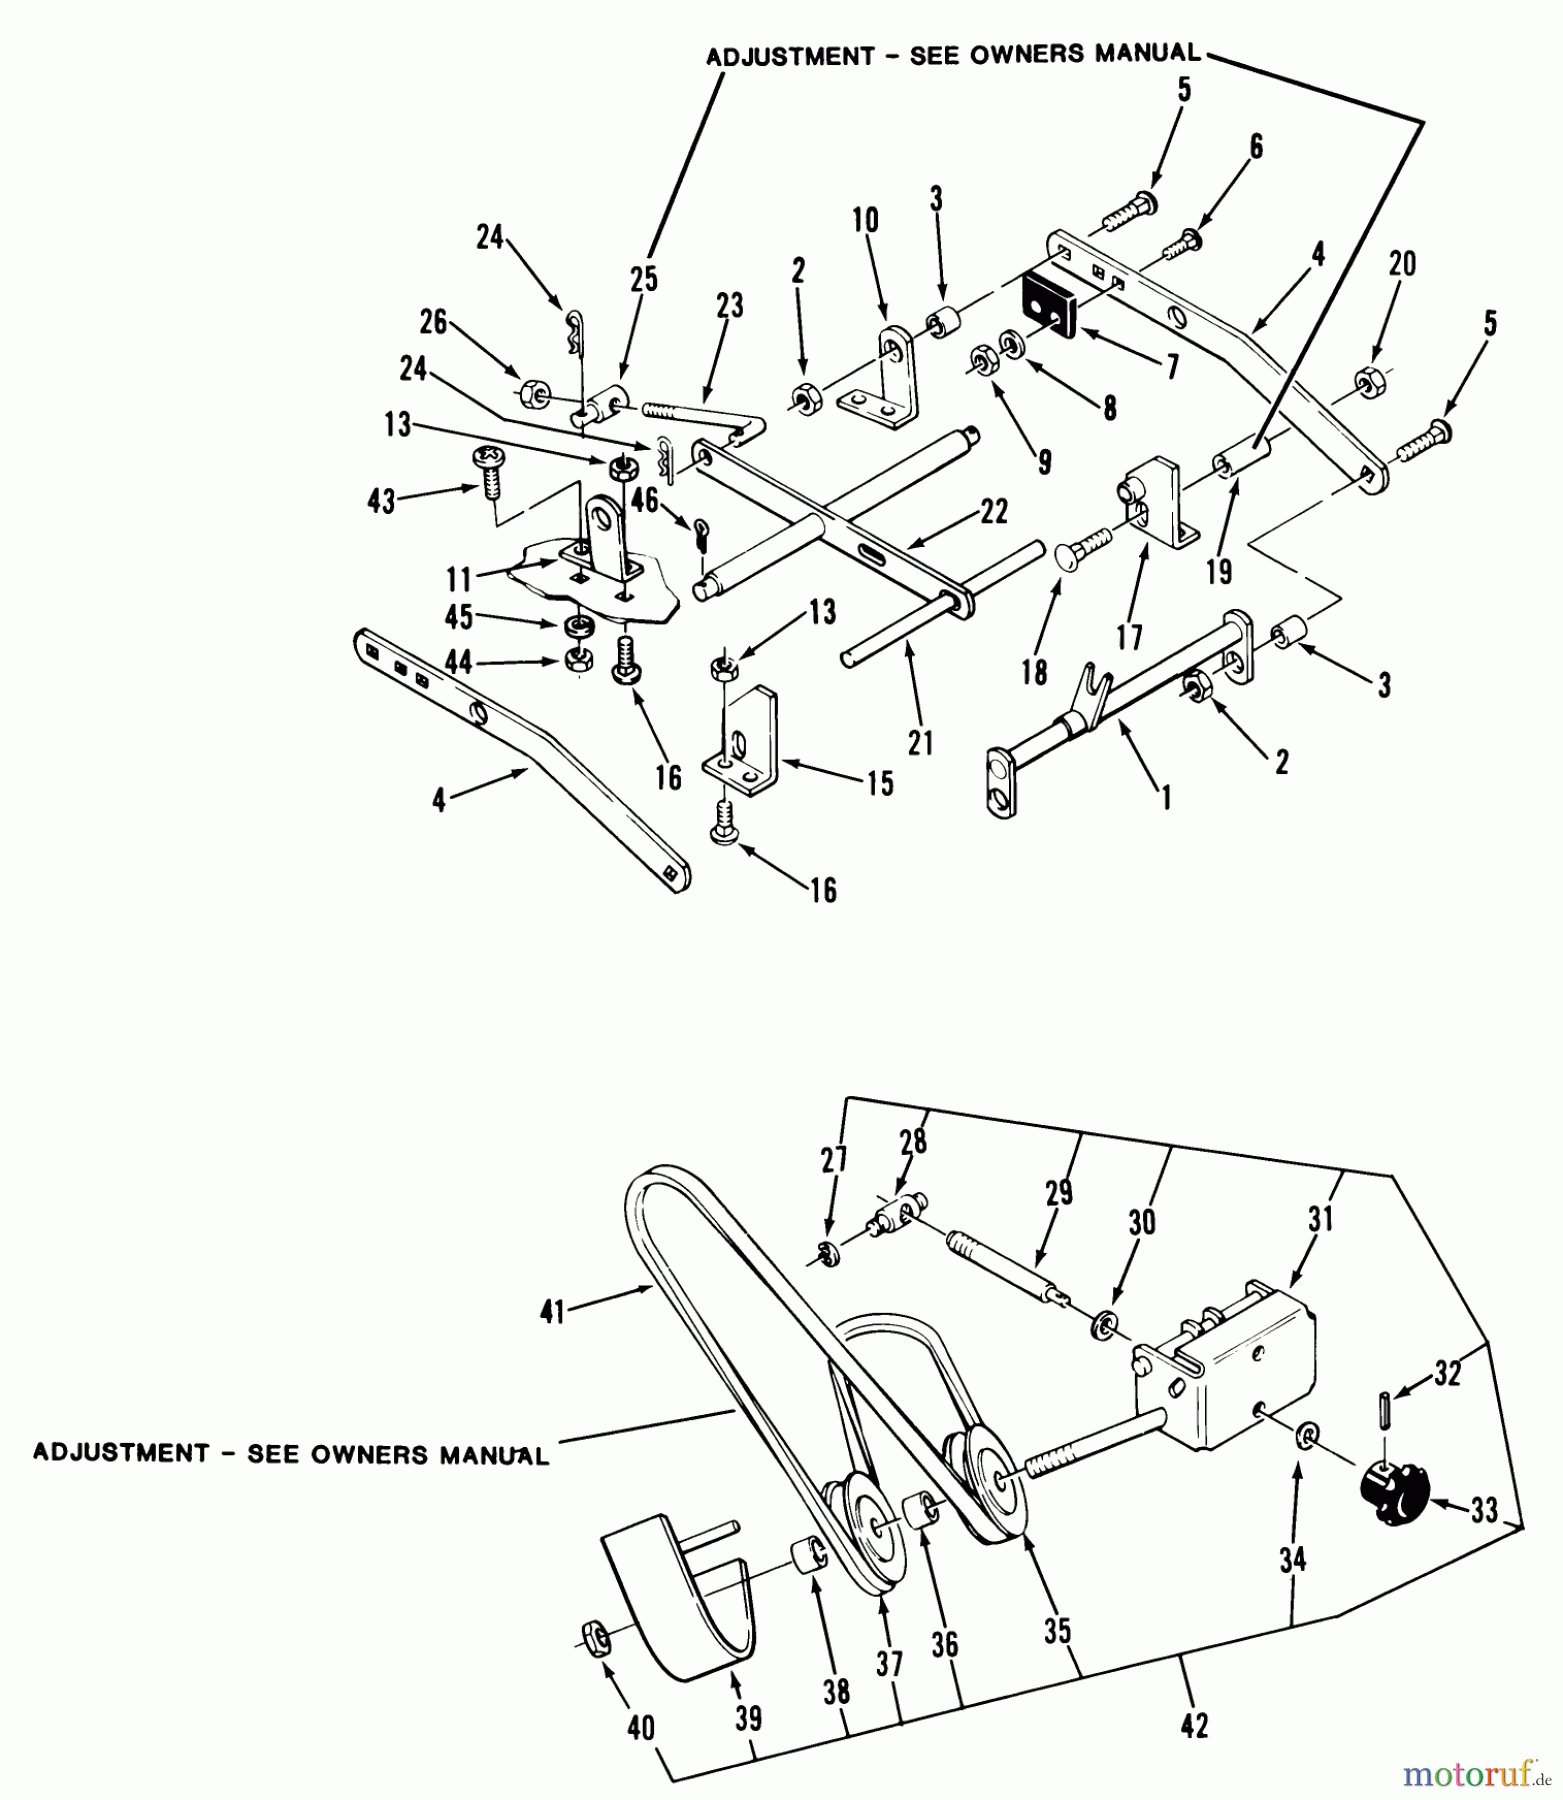  Toro Neu Mowers, Deck Assembly Only 05-36MR04 - Toro 36